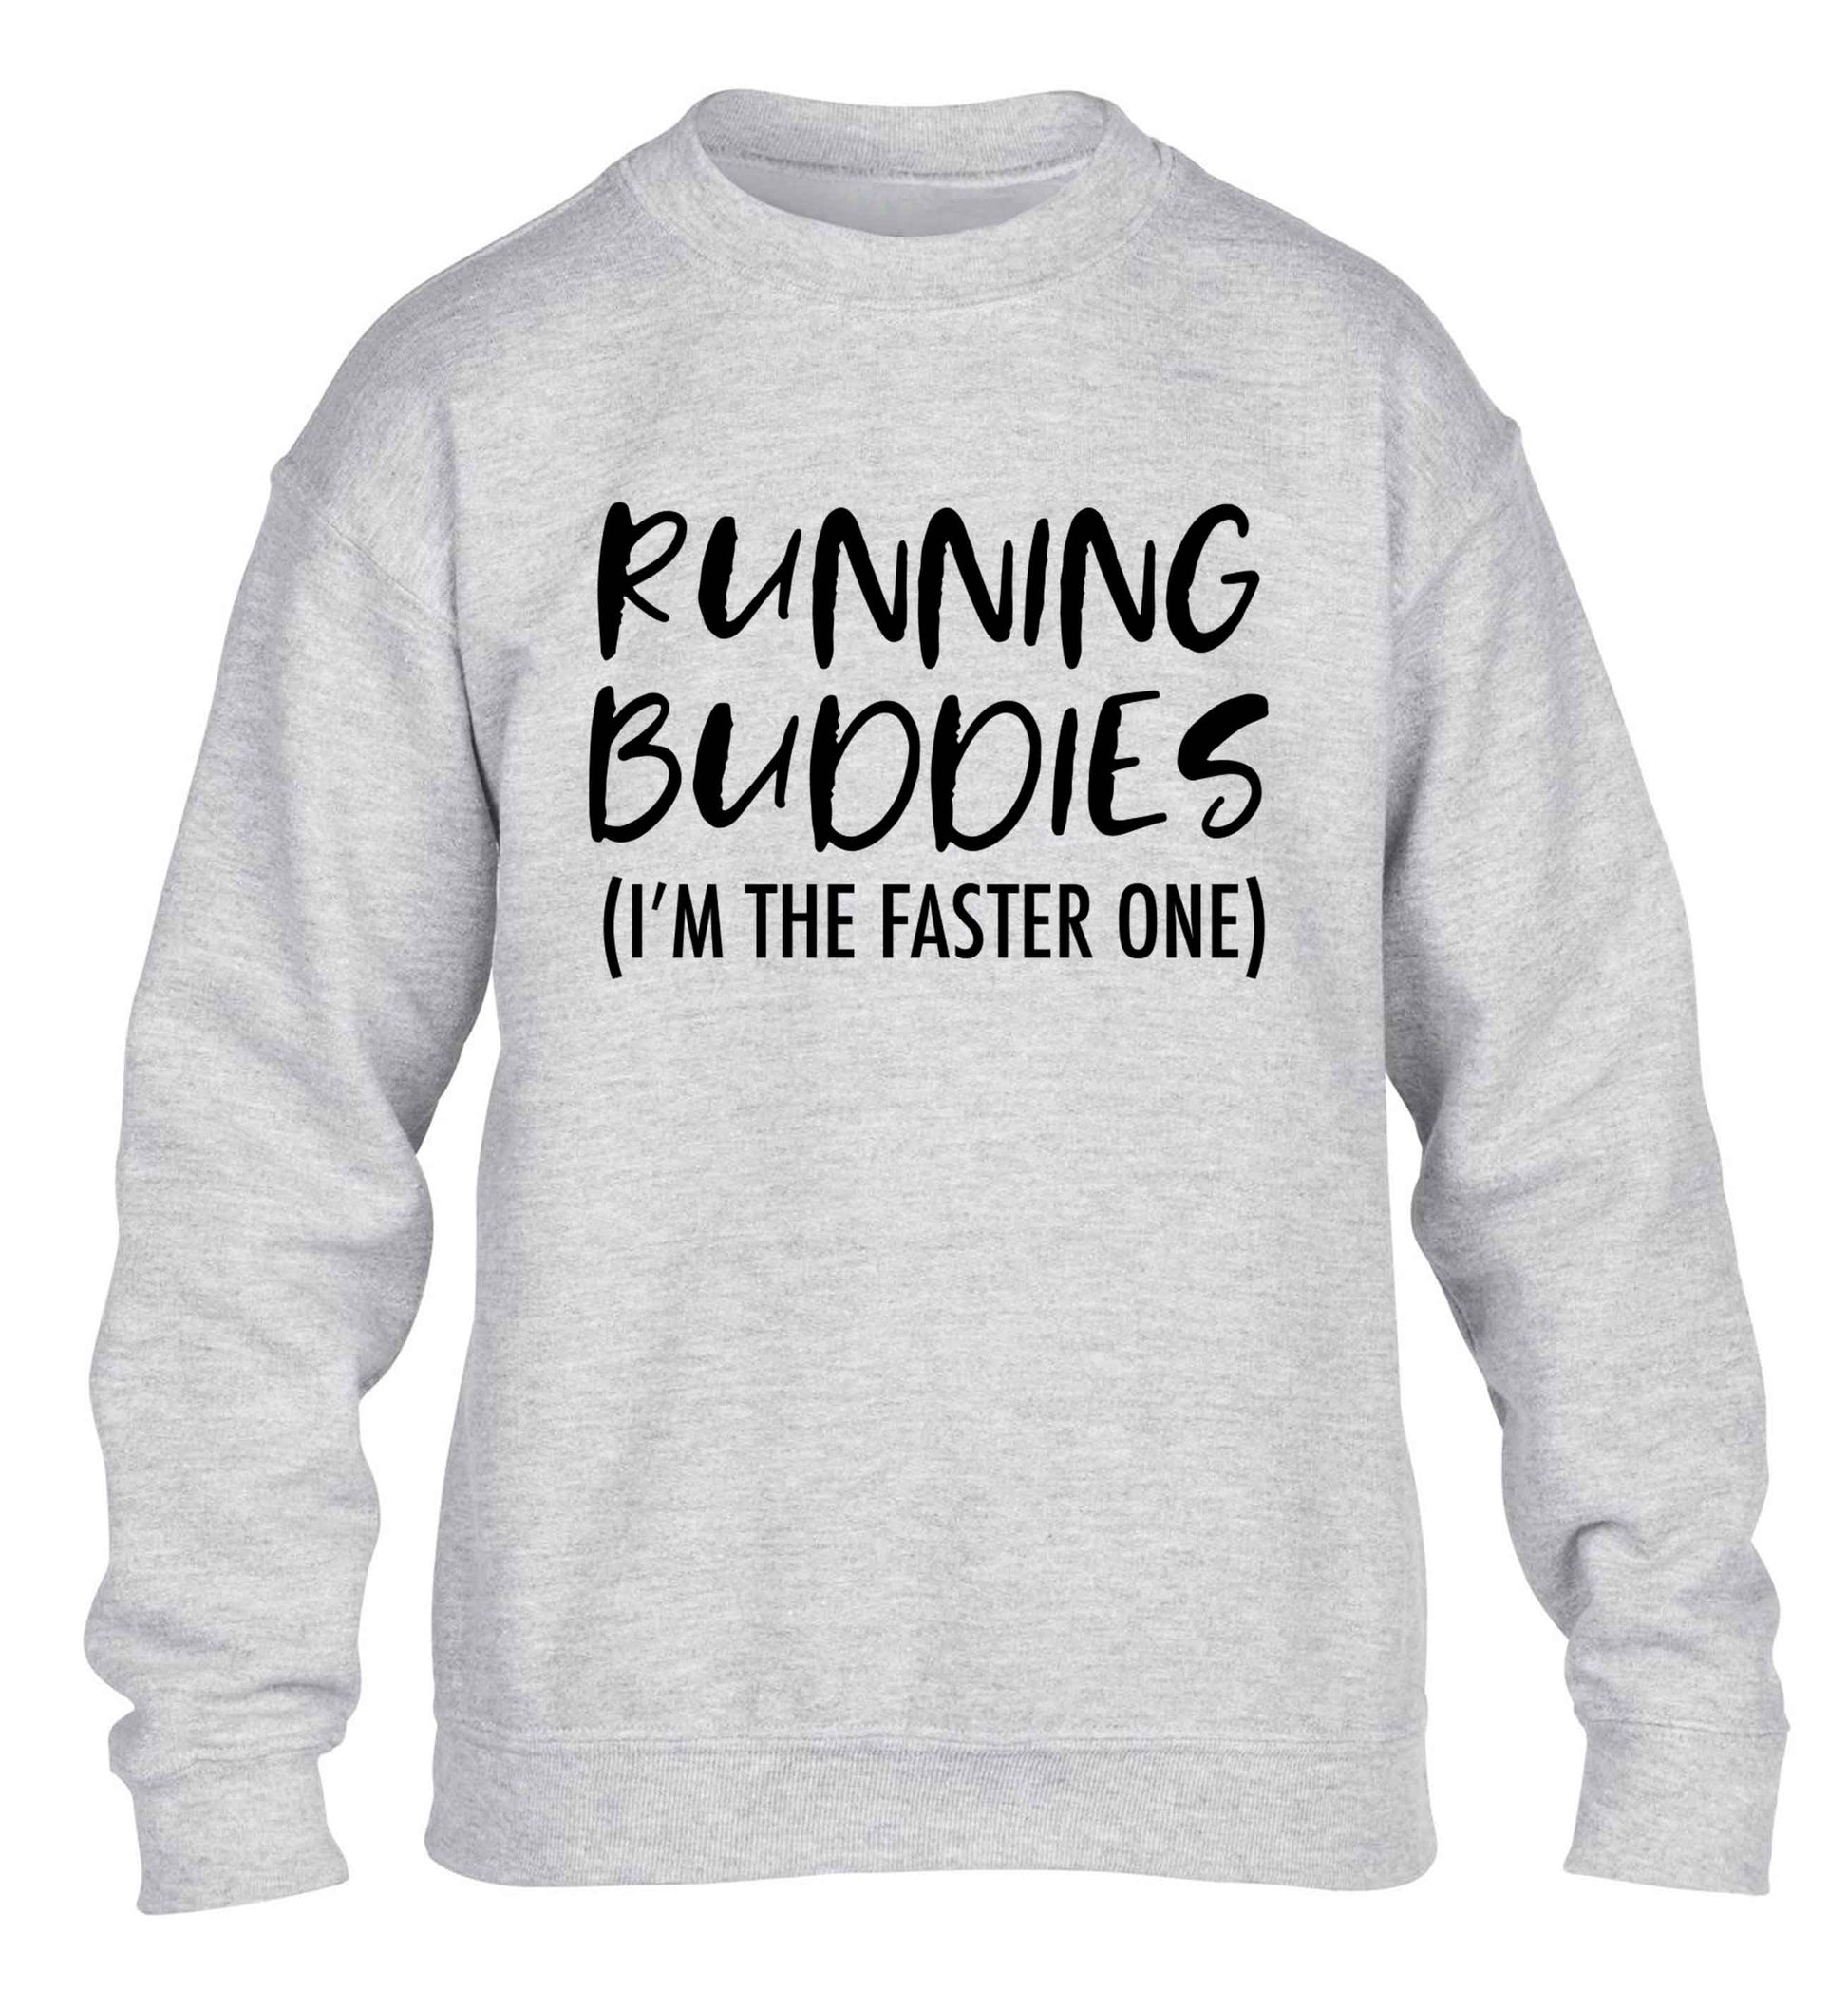 Running buddies (I'm the faster one) children's grey sweater 12-13 Years